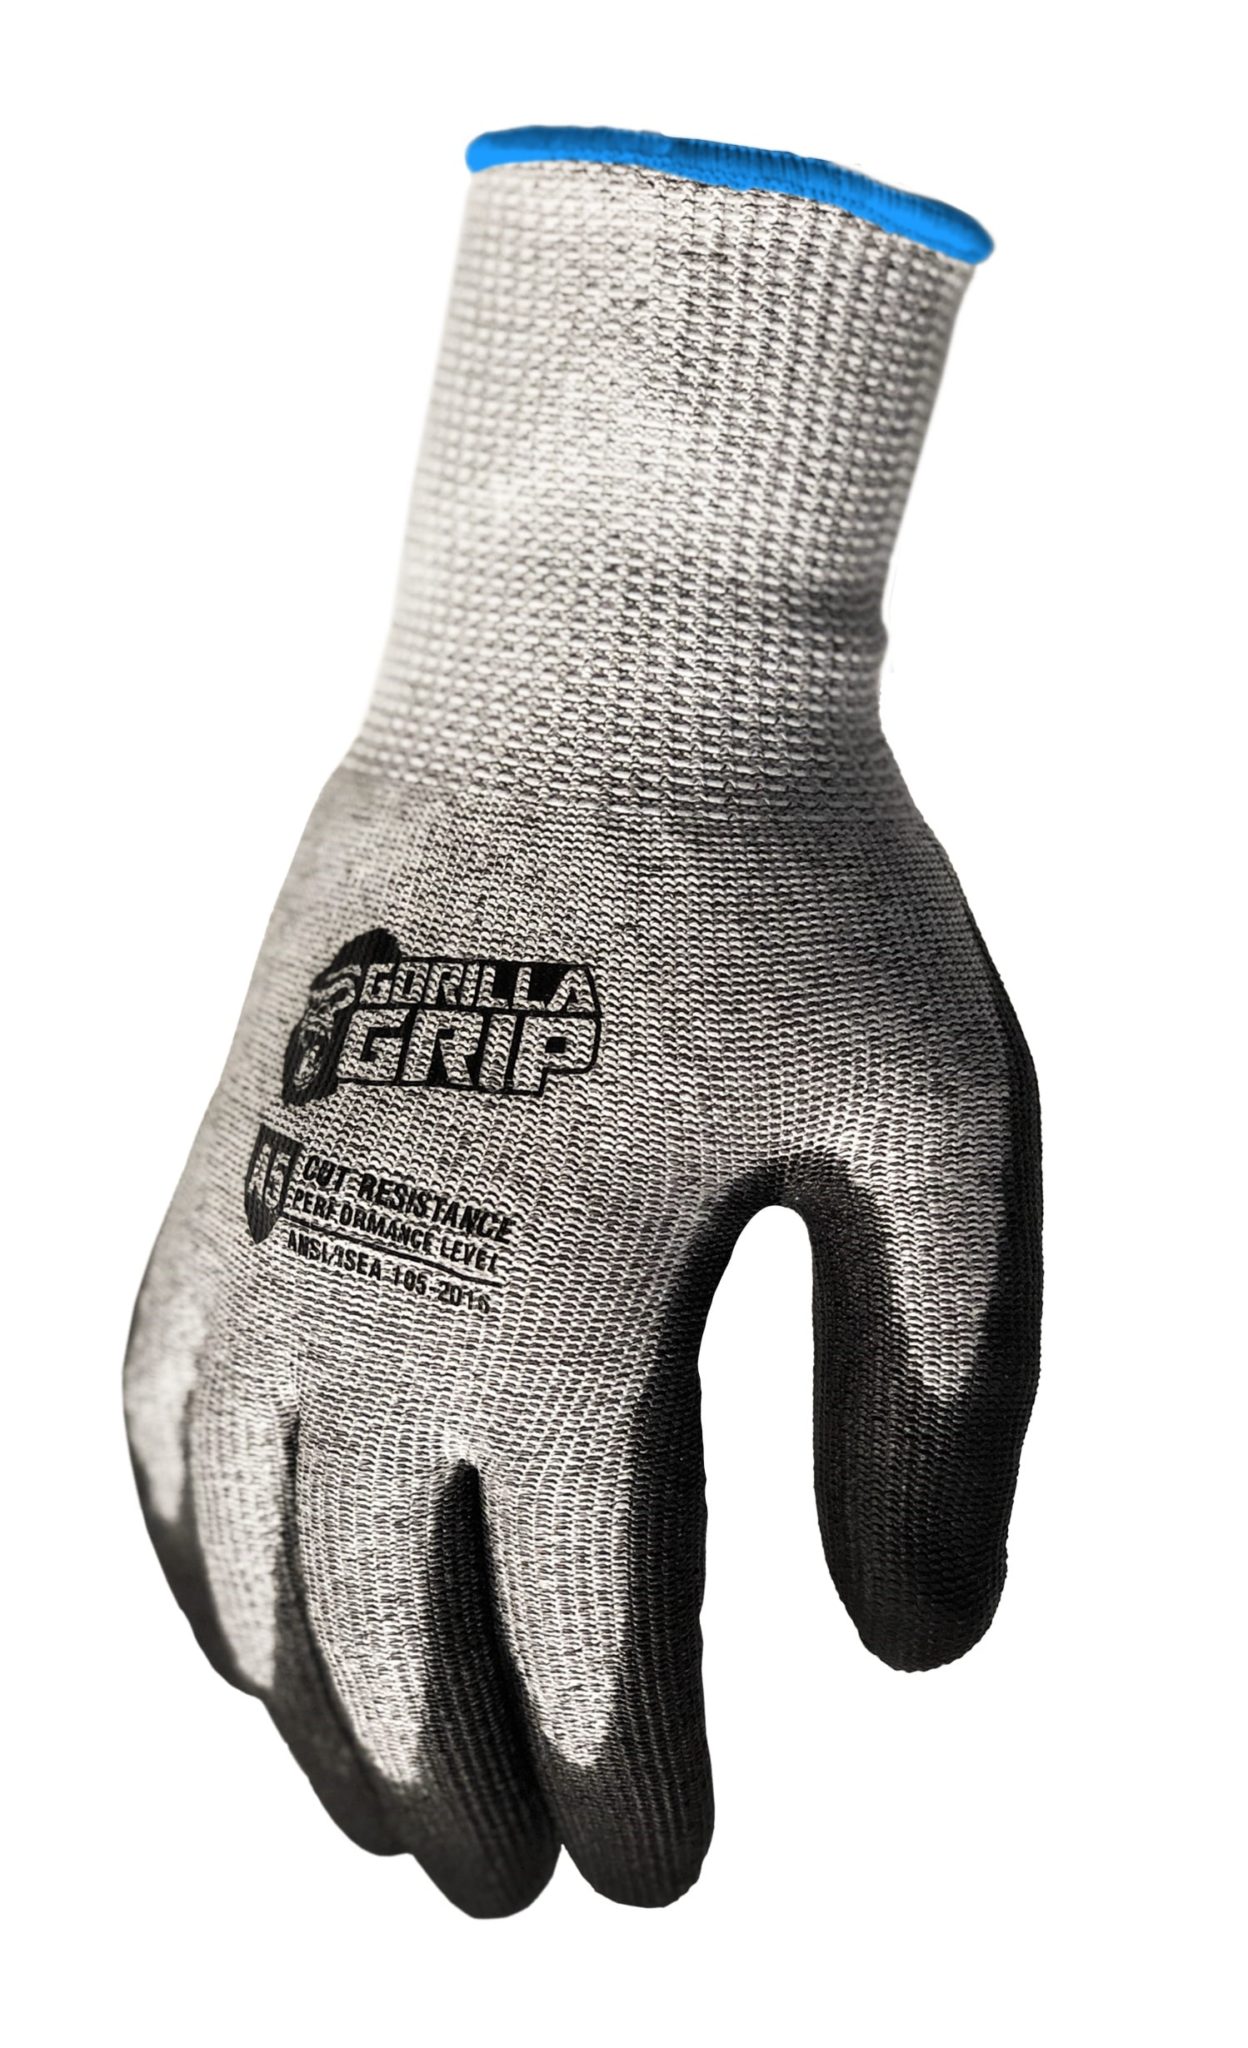 5 X Gorilla Grip Never Slip Maximum Grip All-Purpose Gloves Size